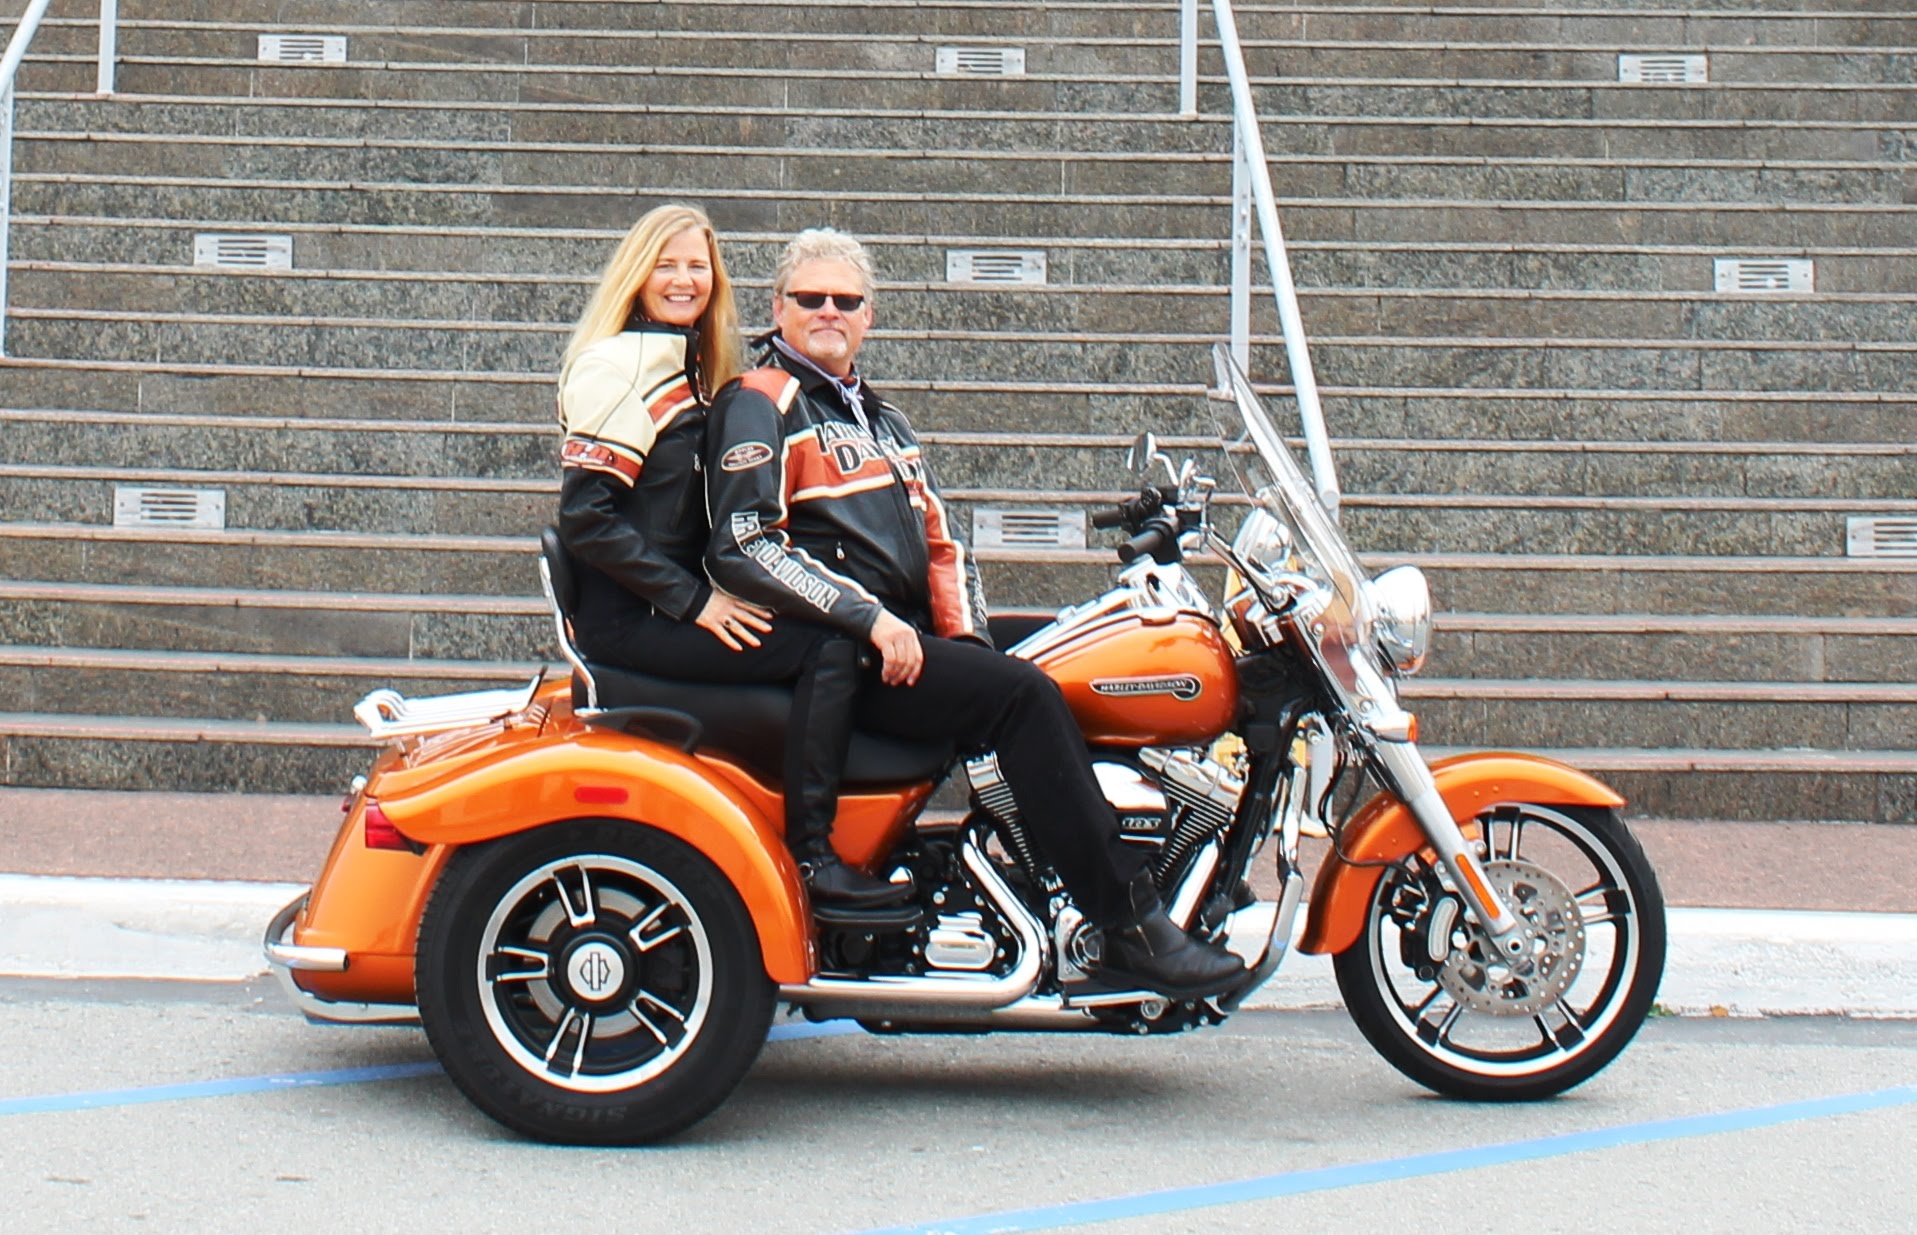 Harley-Davidson Freewheeler HD wallpapers, Desktop wallpaper - most viewed